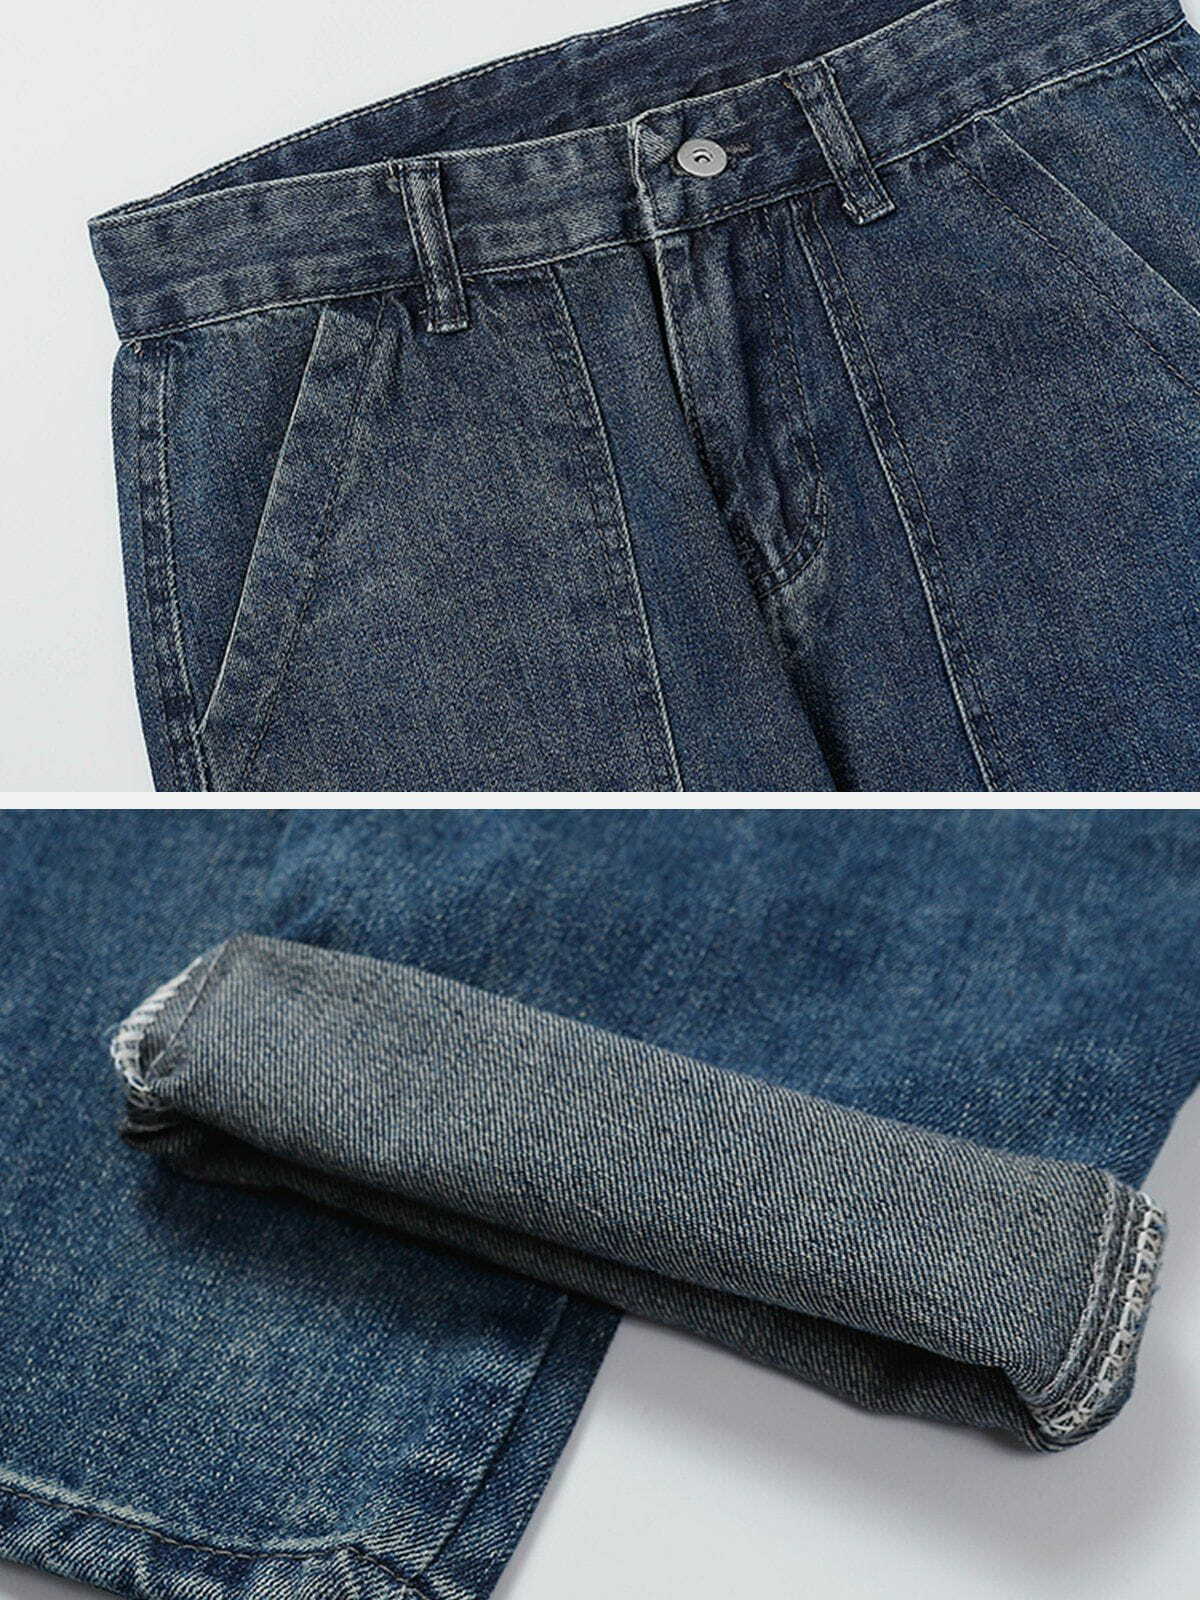 patchwork denim jeans edgy streetwear essential 1000